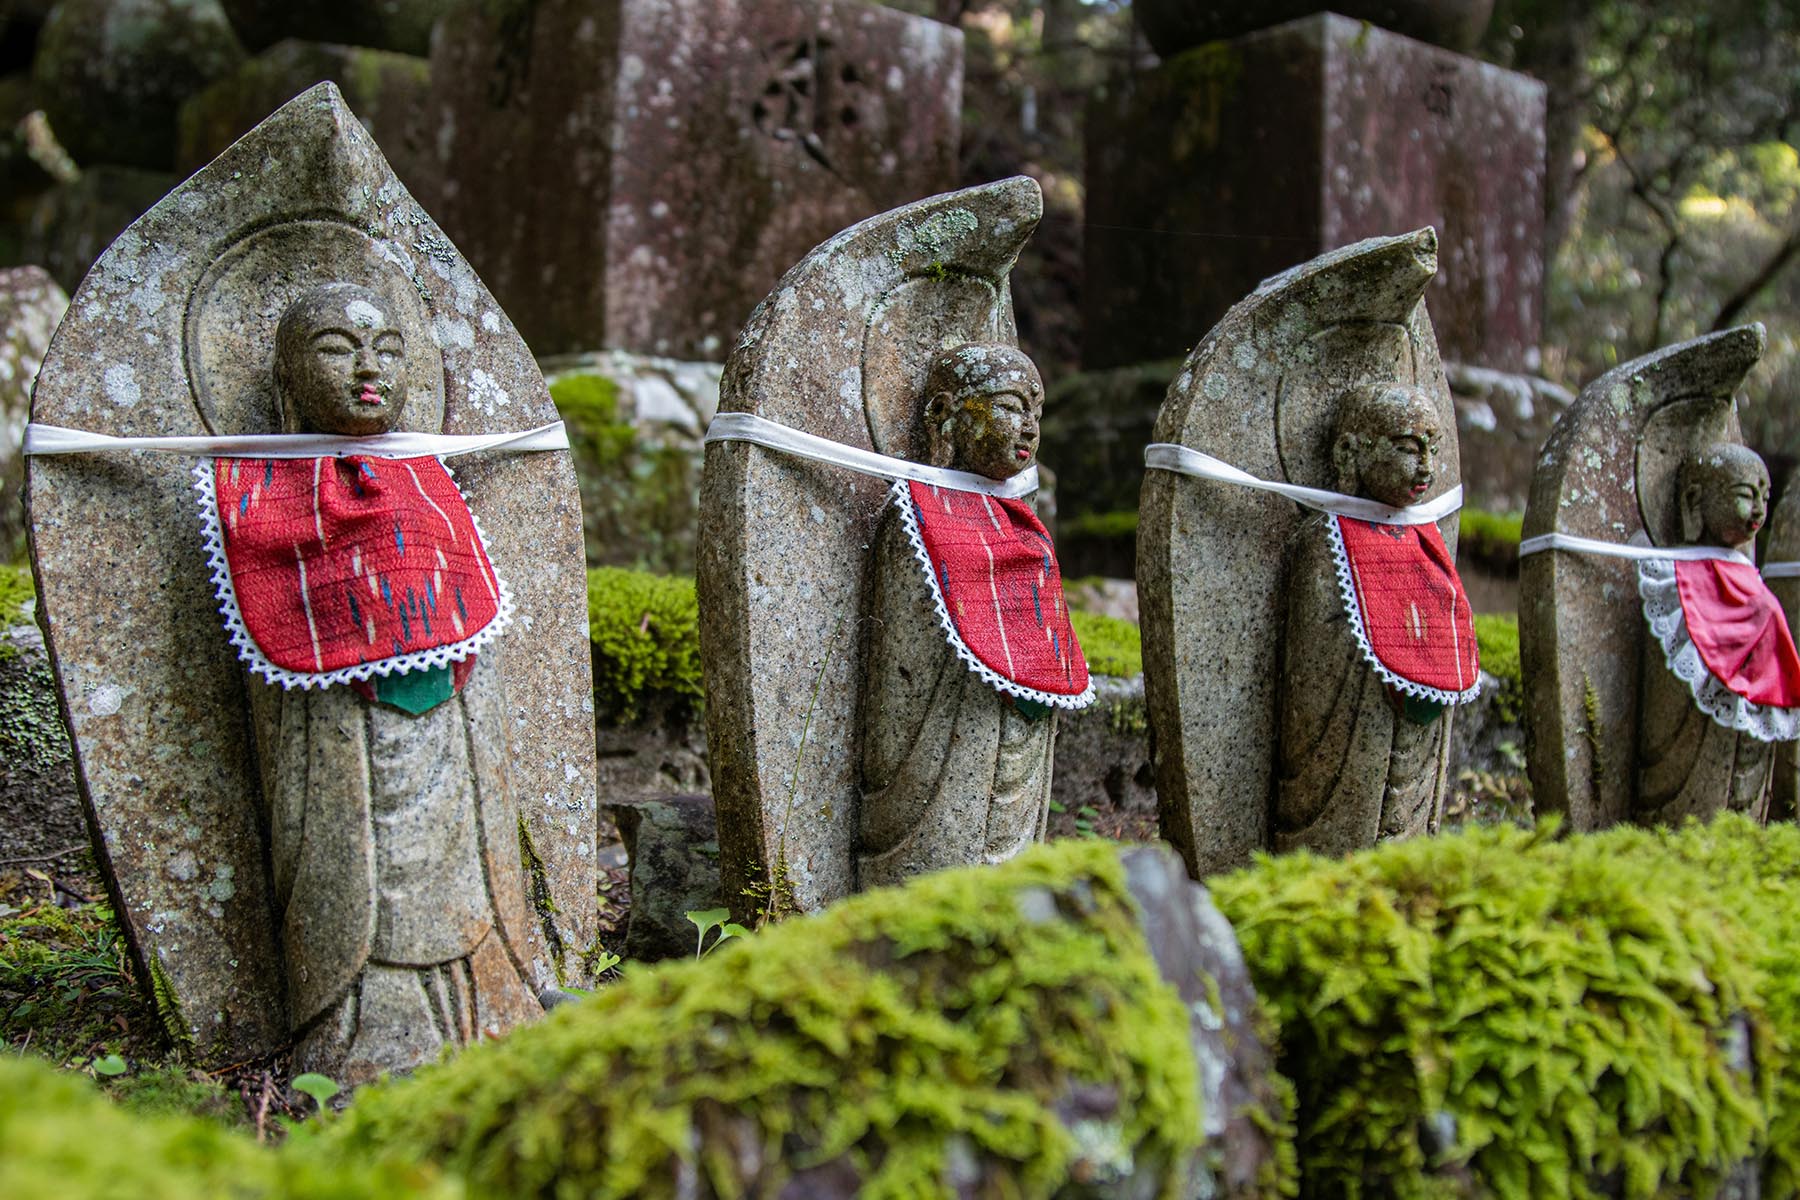 Small Jizo statues wearing (what looks like) bibs in the sacred Okunoin Cemetery in Koyasan, Japan.